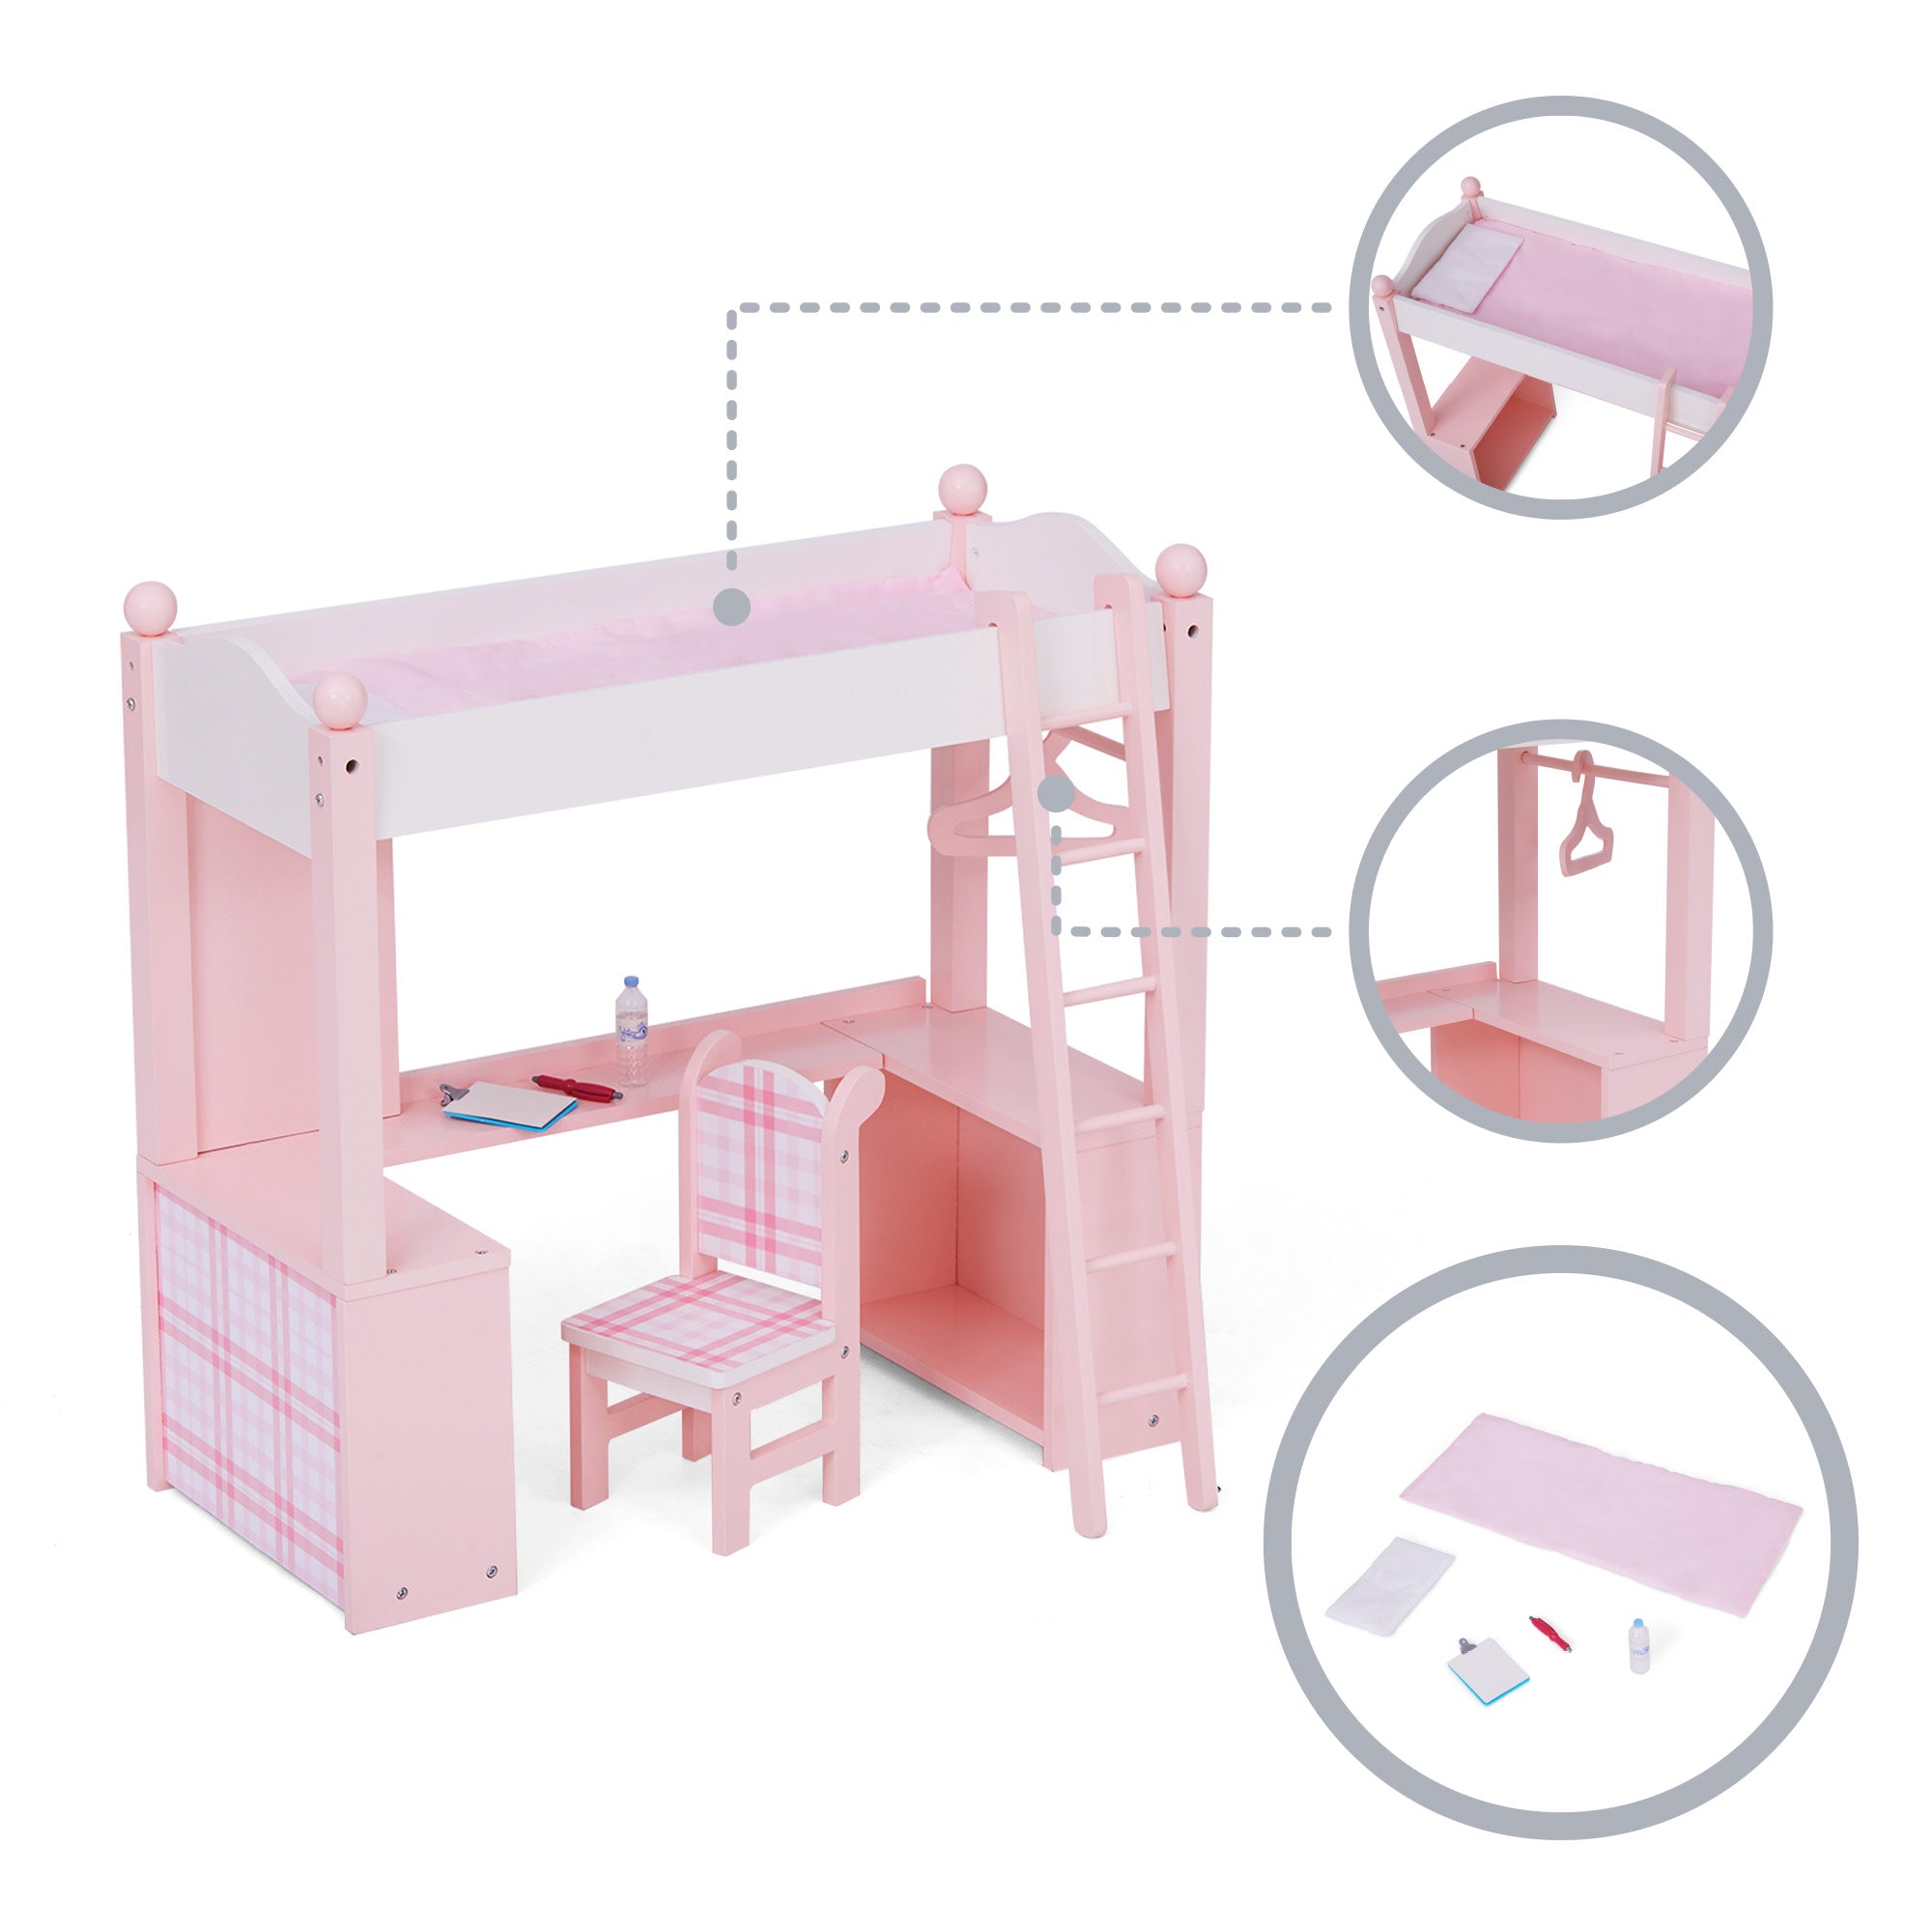 Sophia's Aurora Princess Plaid Loft Bed, Desk, Chair, & Play Accessories for 18" Dolls, Pink